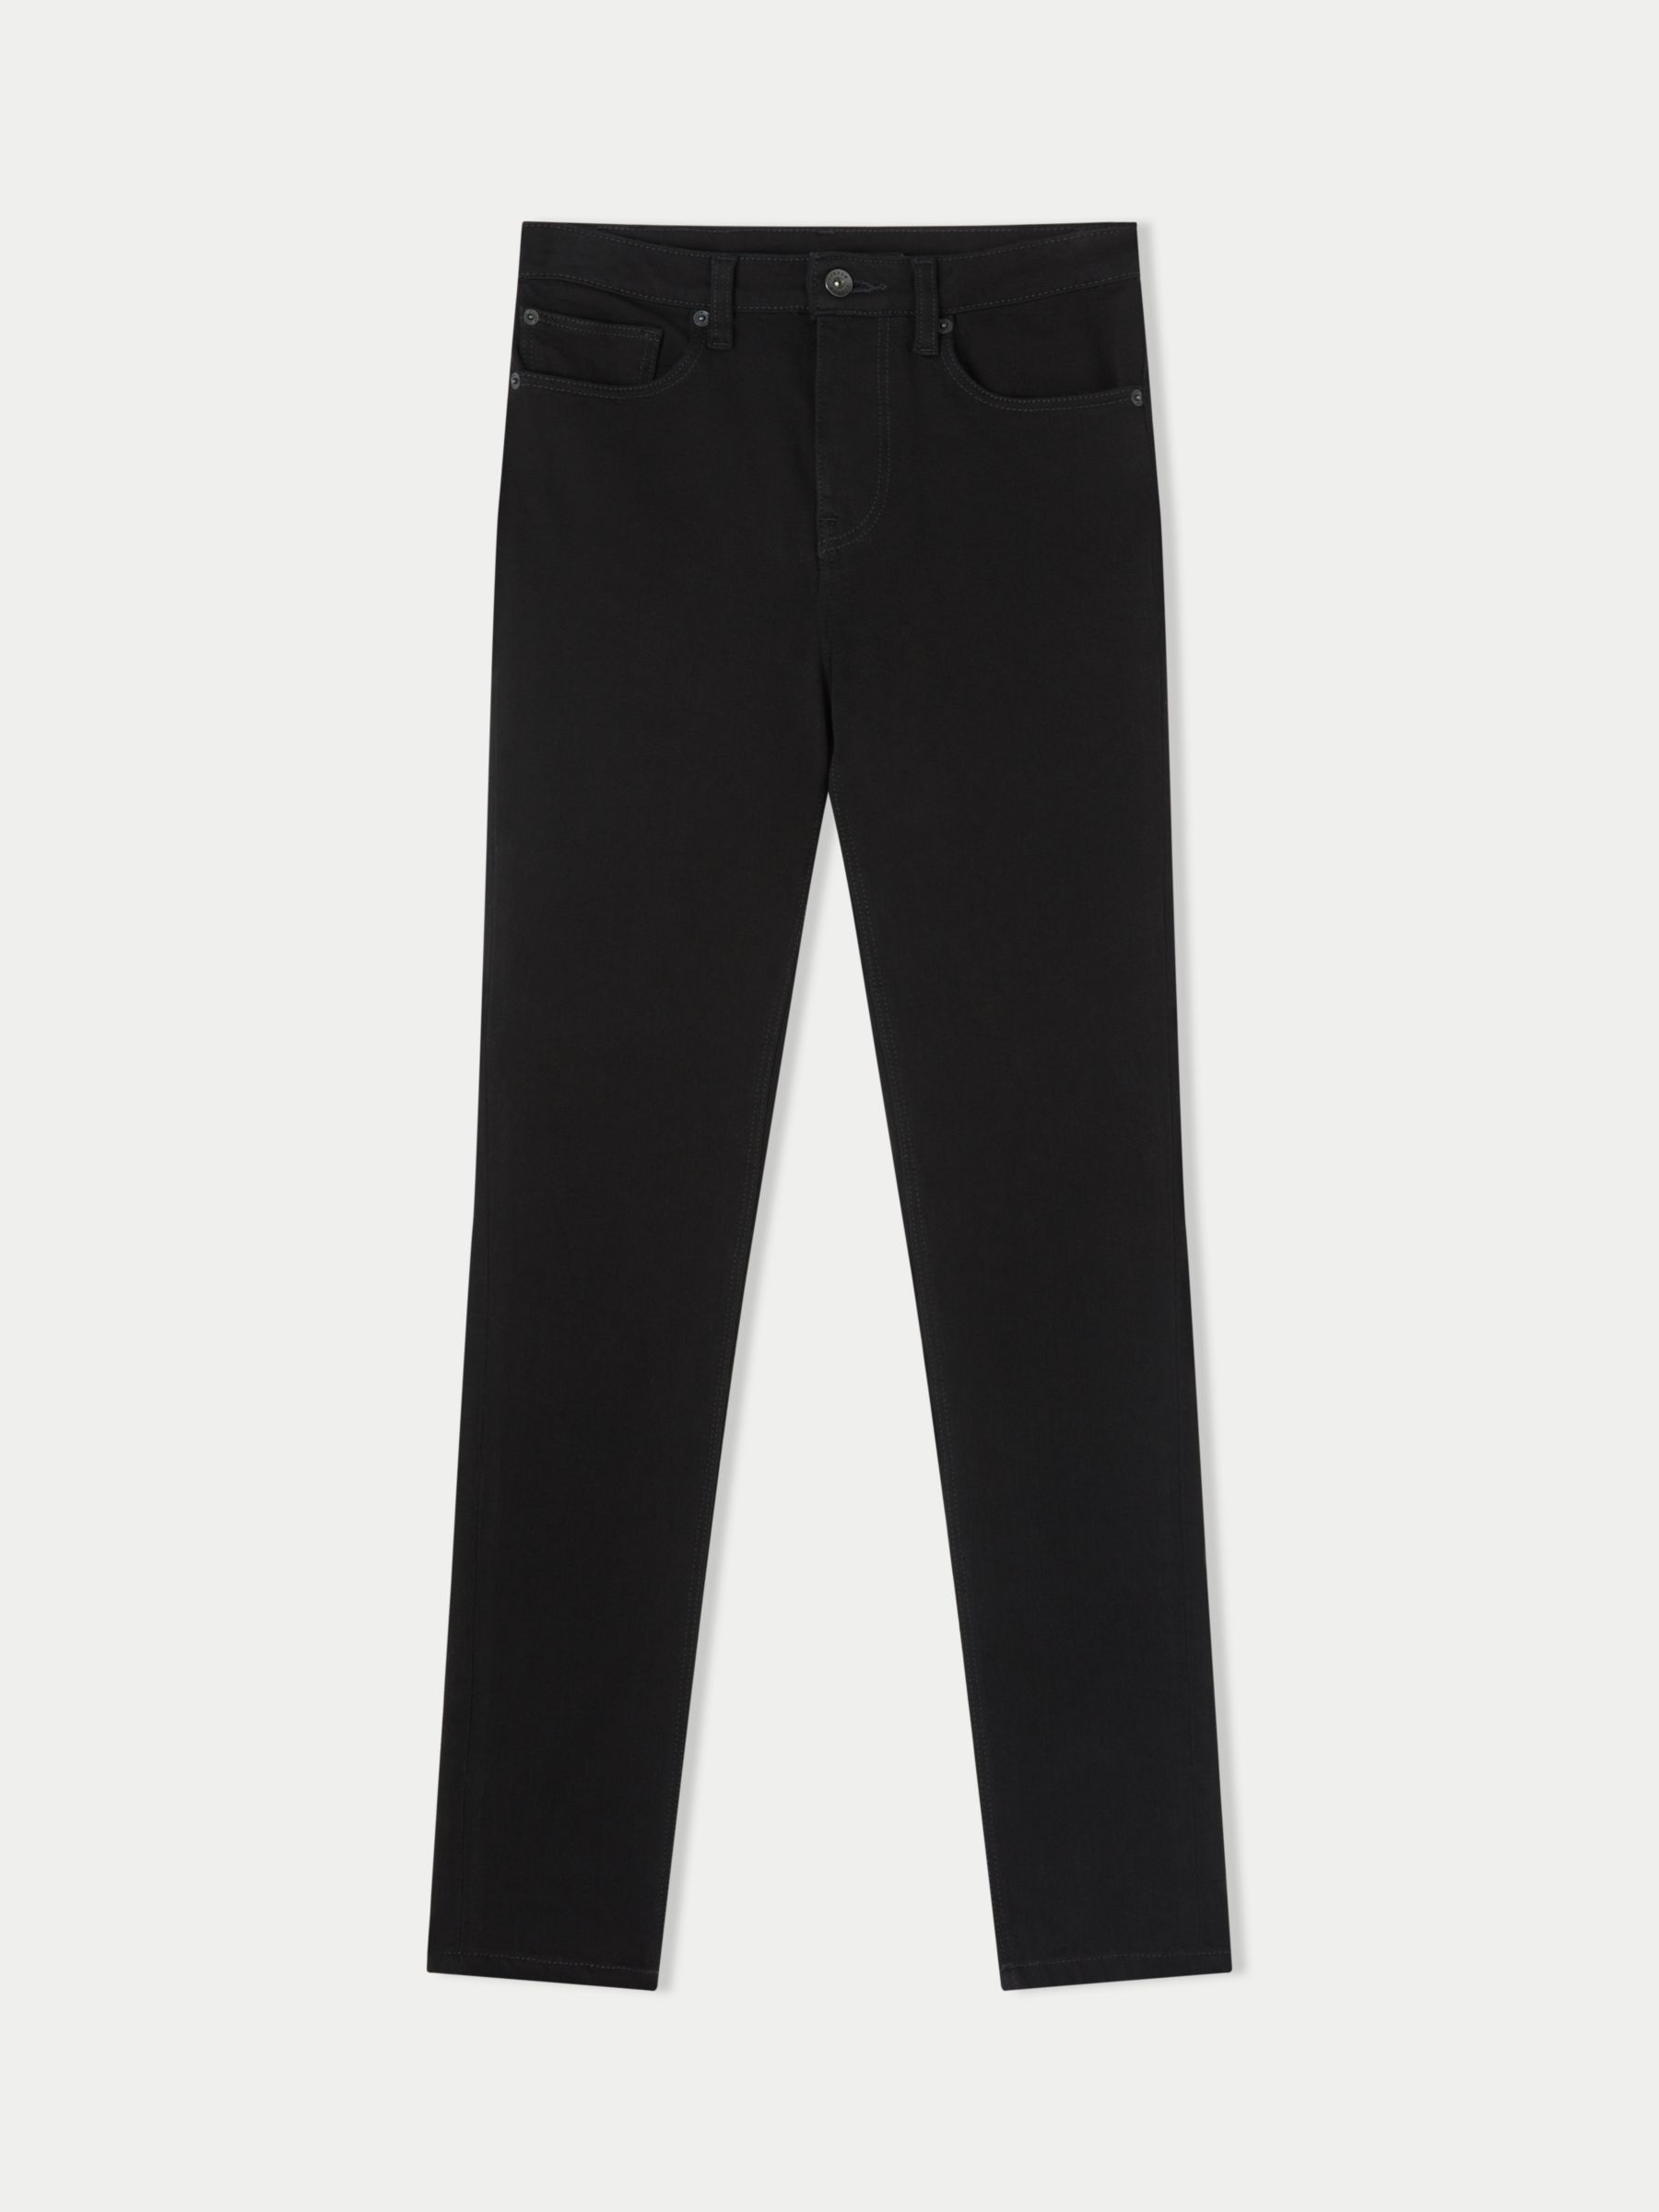 Jigsaw Richmond Skinny Jeans, Black at John Lewis & Partners